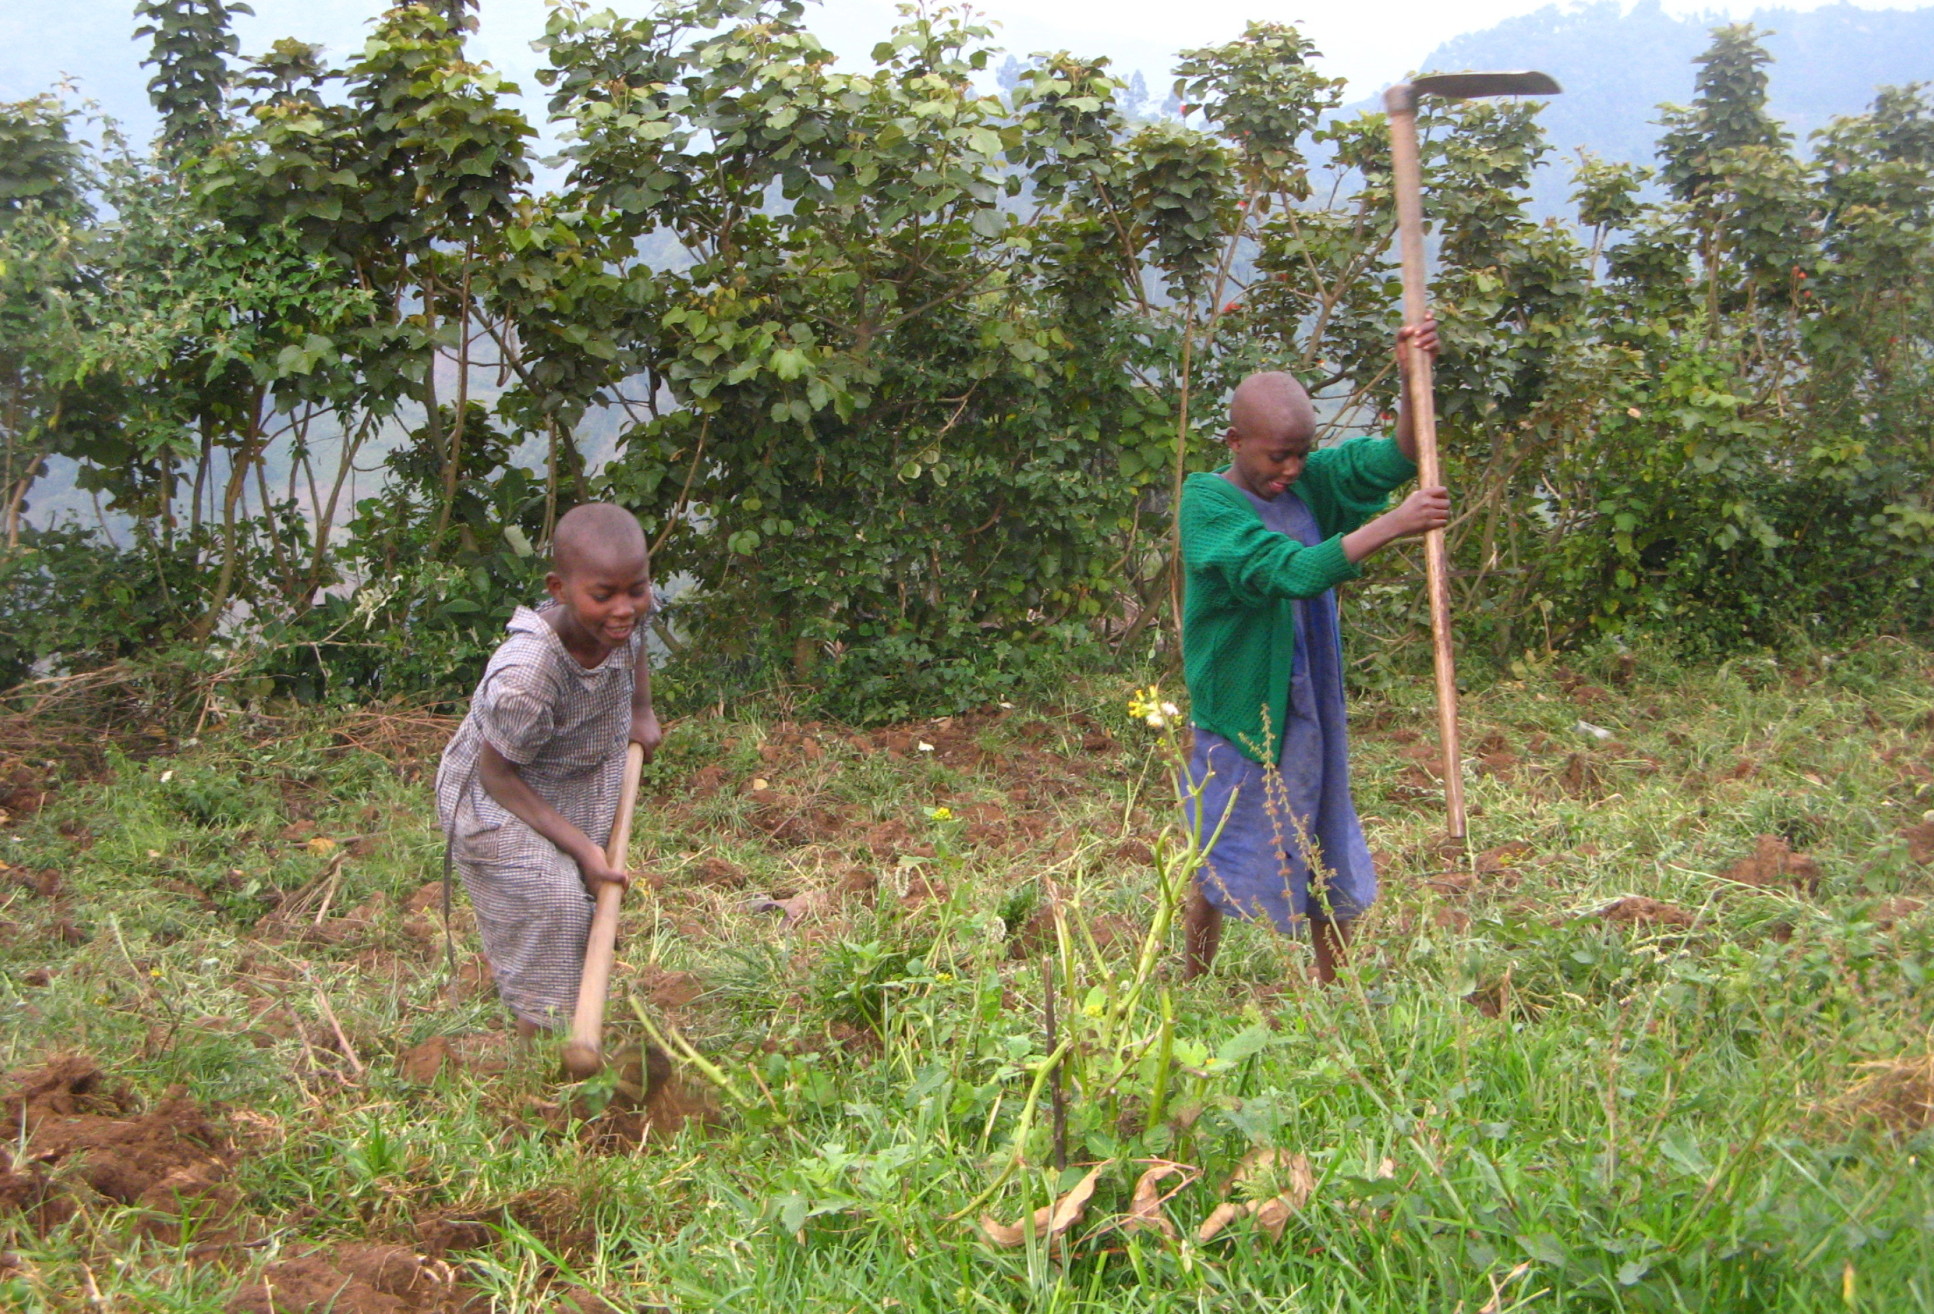 Two Ugandan children digging a field